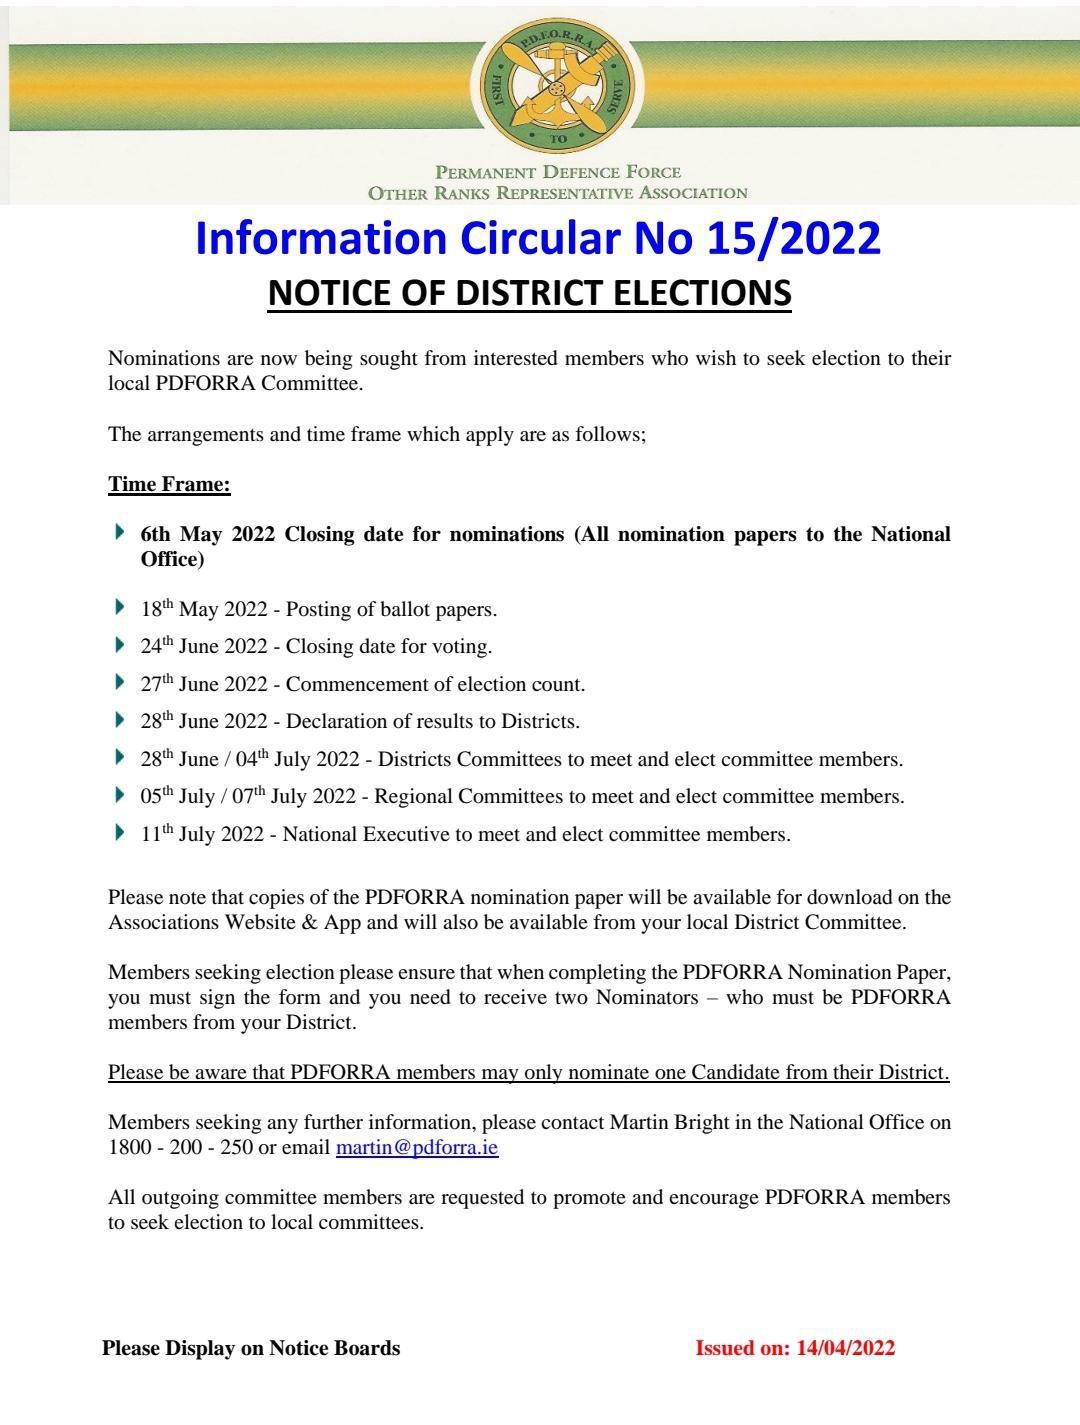 Information Circular No 15 of 22 - Notice of District Elections 2022